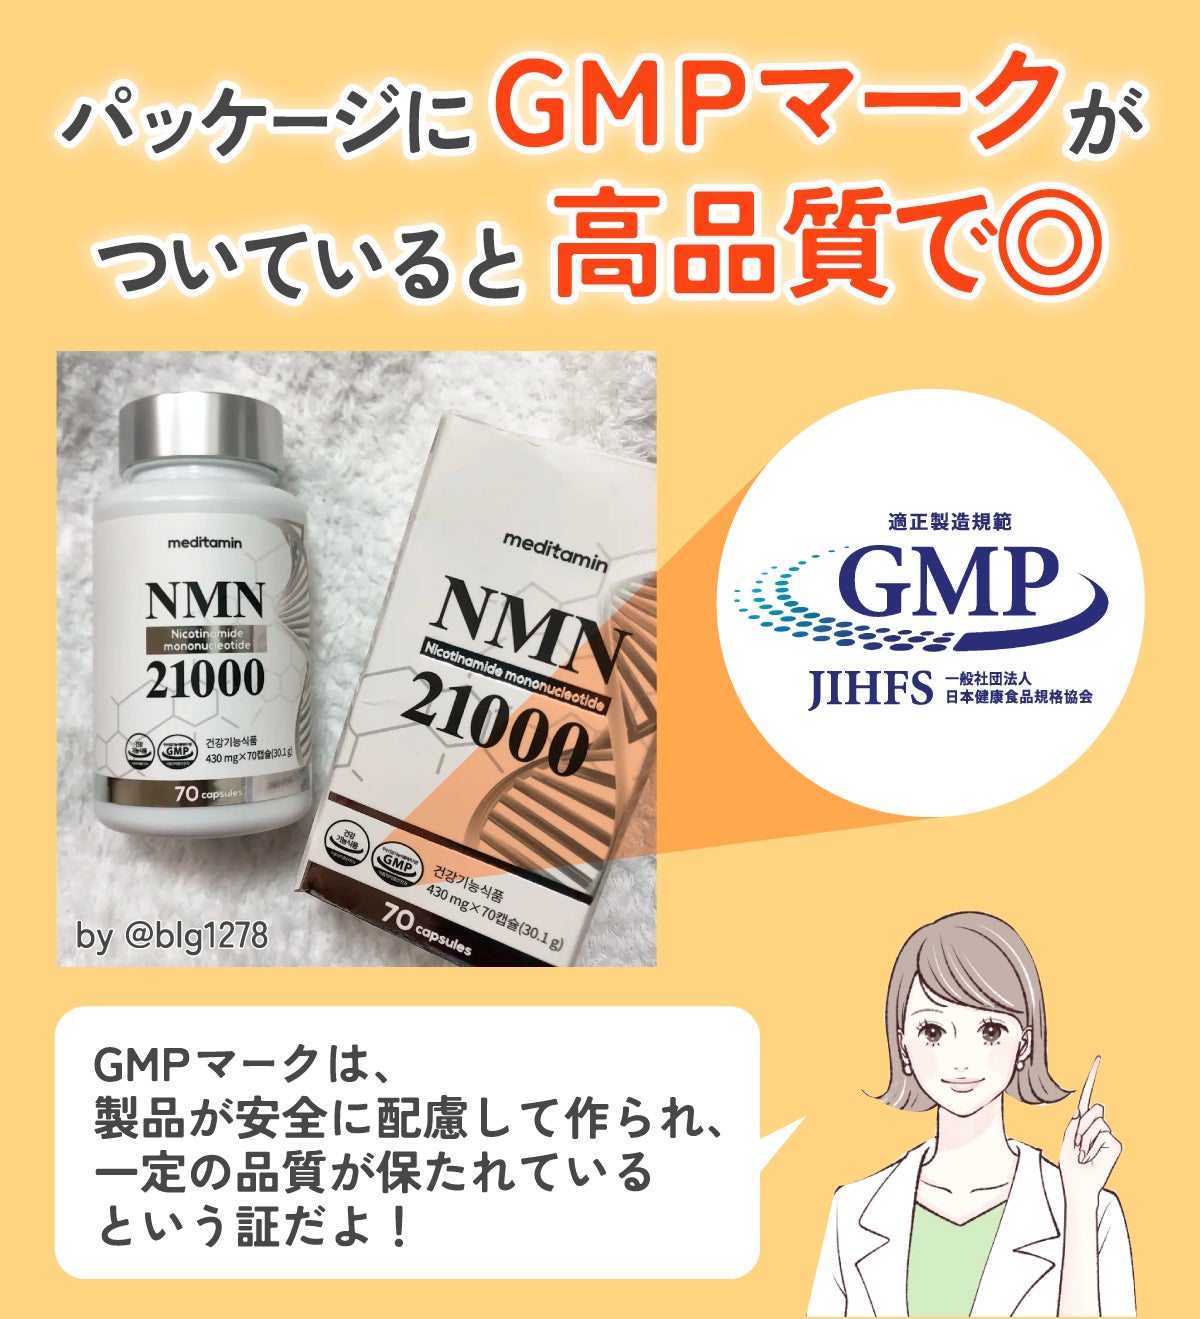 GMPマークは製品が安全に配慮して作られ一定の品質が保たれている基準なので、パッケージにGMPマークがついていると高品質です。